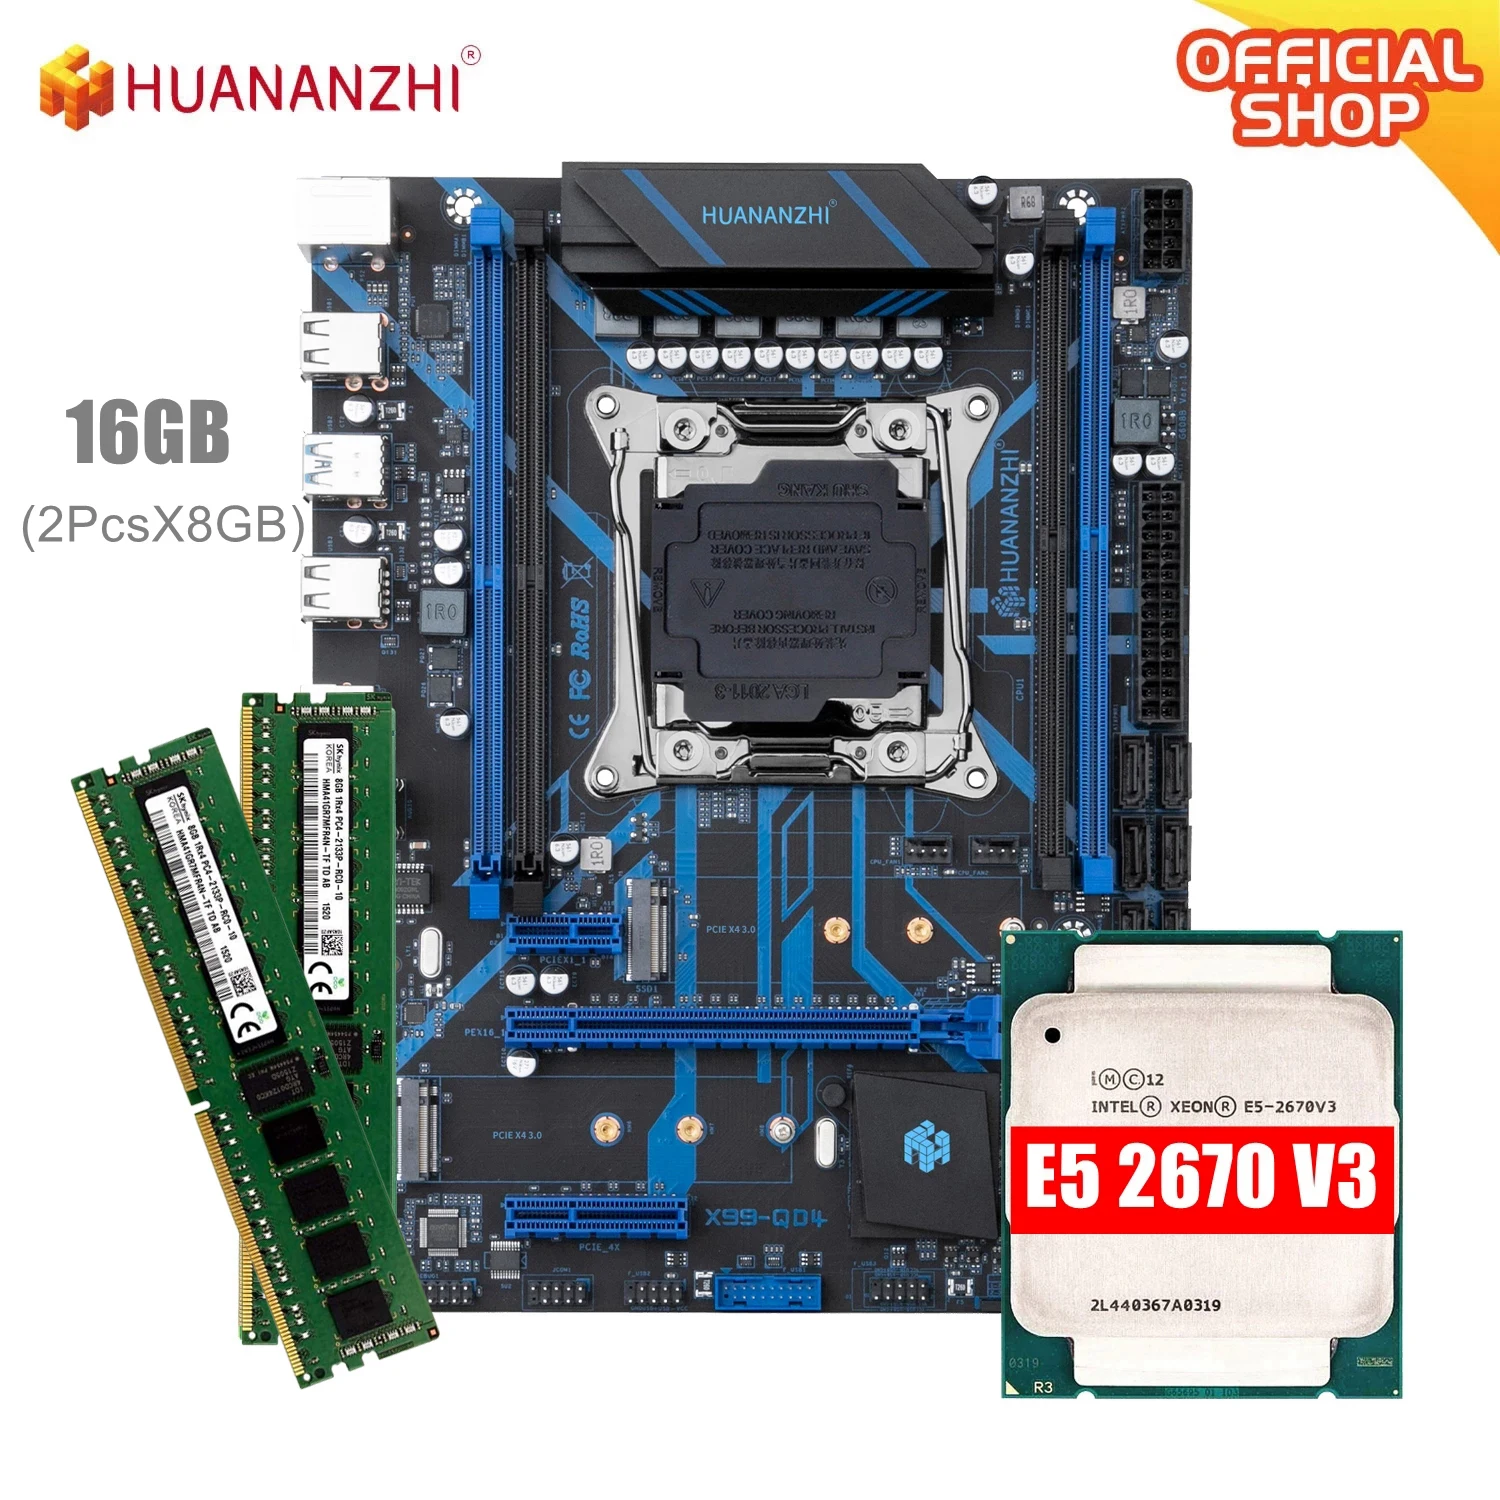 HUANANZHI QD4 LGA 2011-3 Motherboard kit x99 xeon e5 2670 v3 16GB (2*8G) DDR4 RECC memory NVME SATA USB 3.0